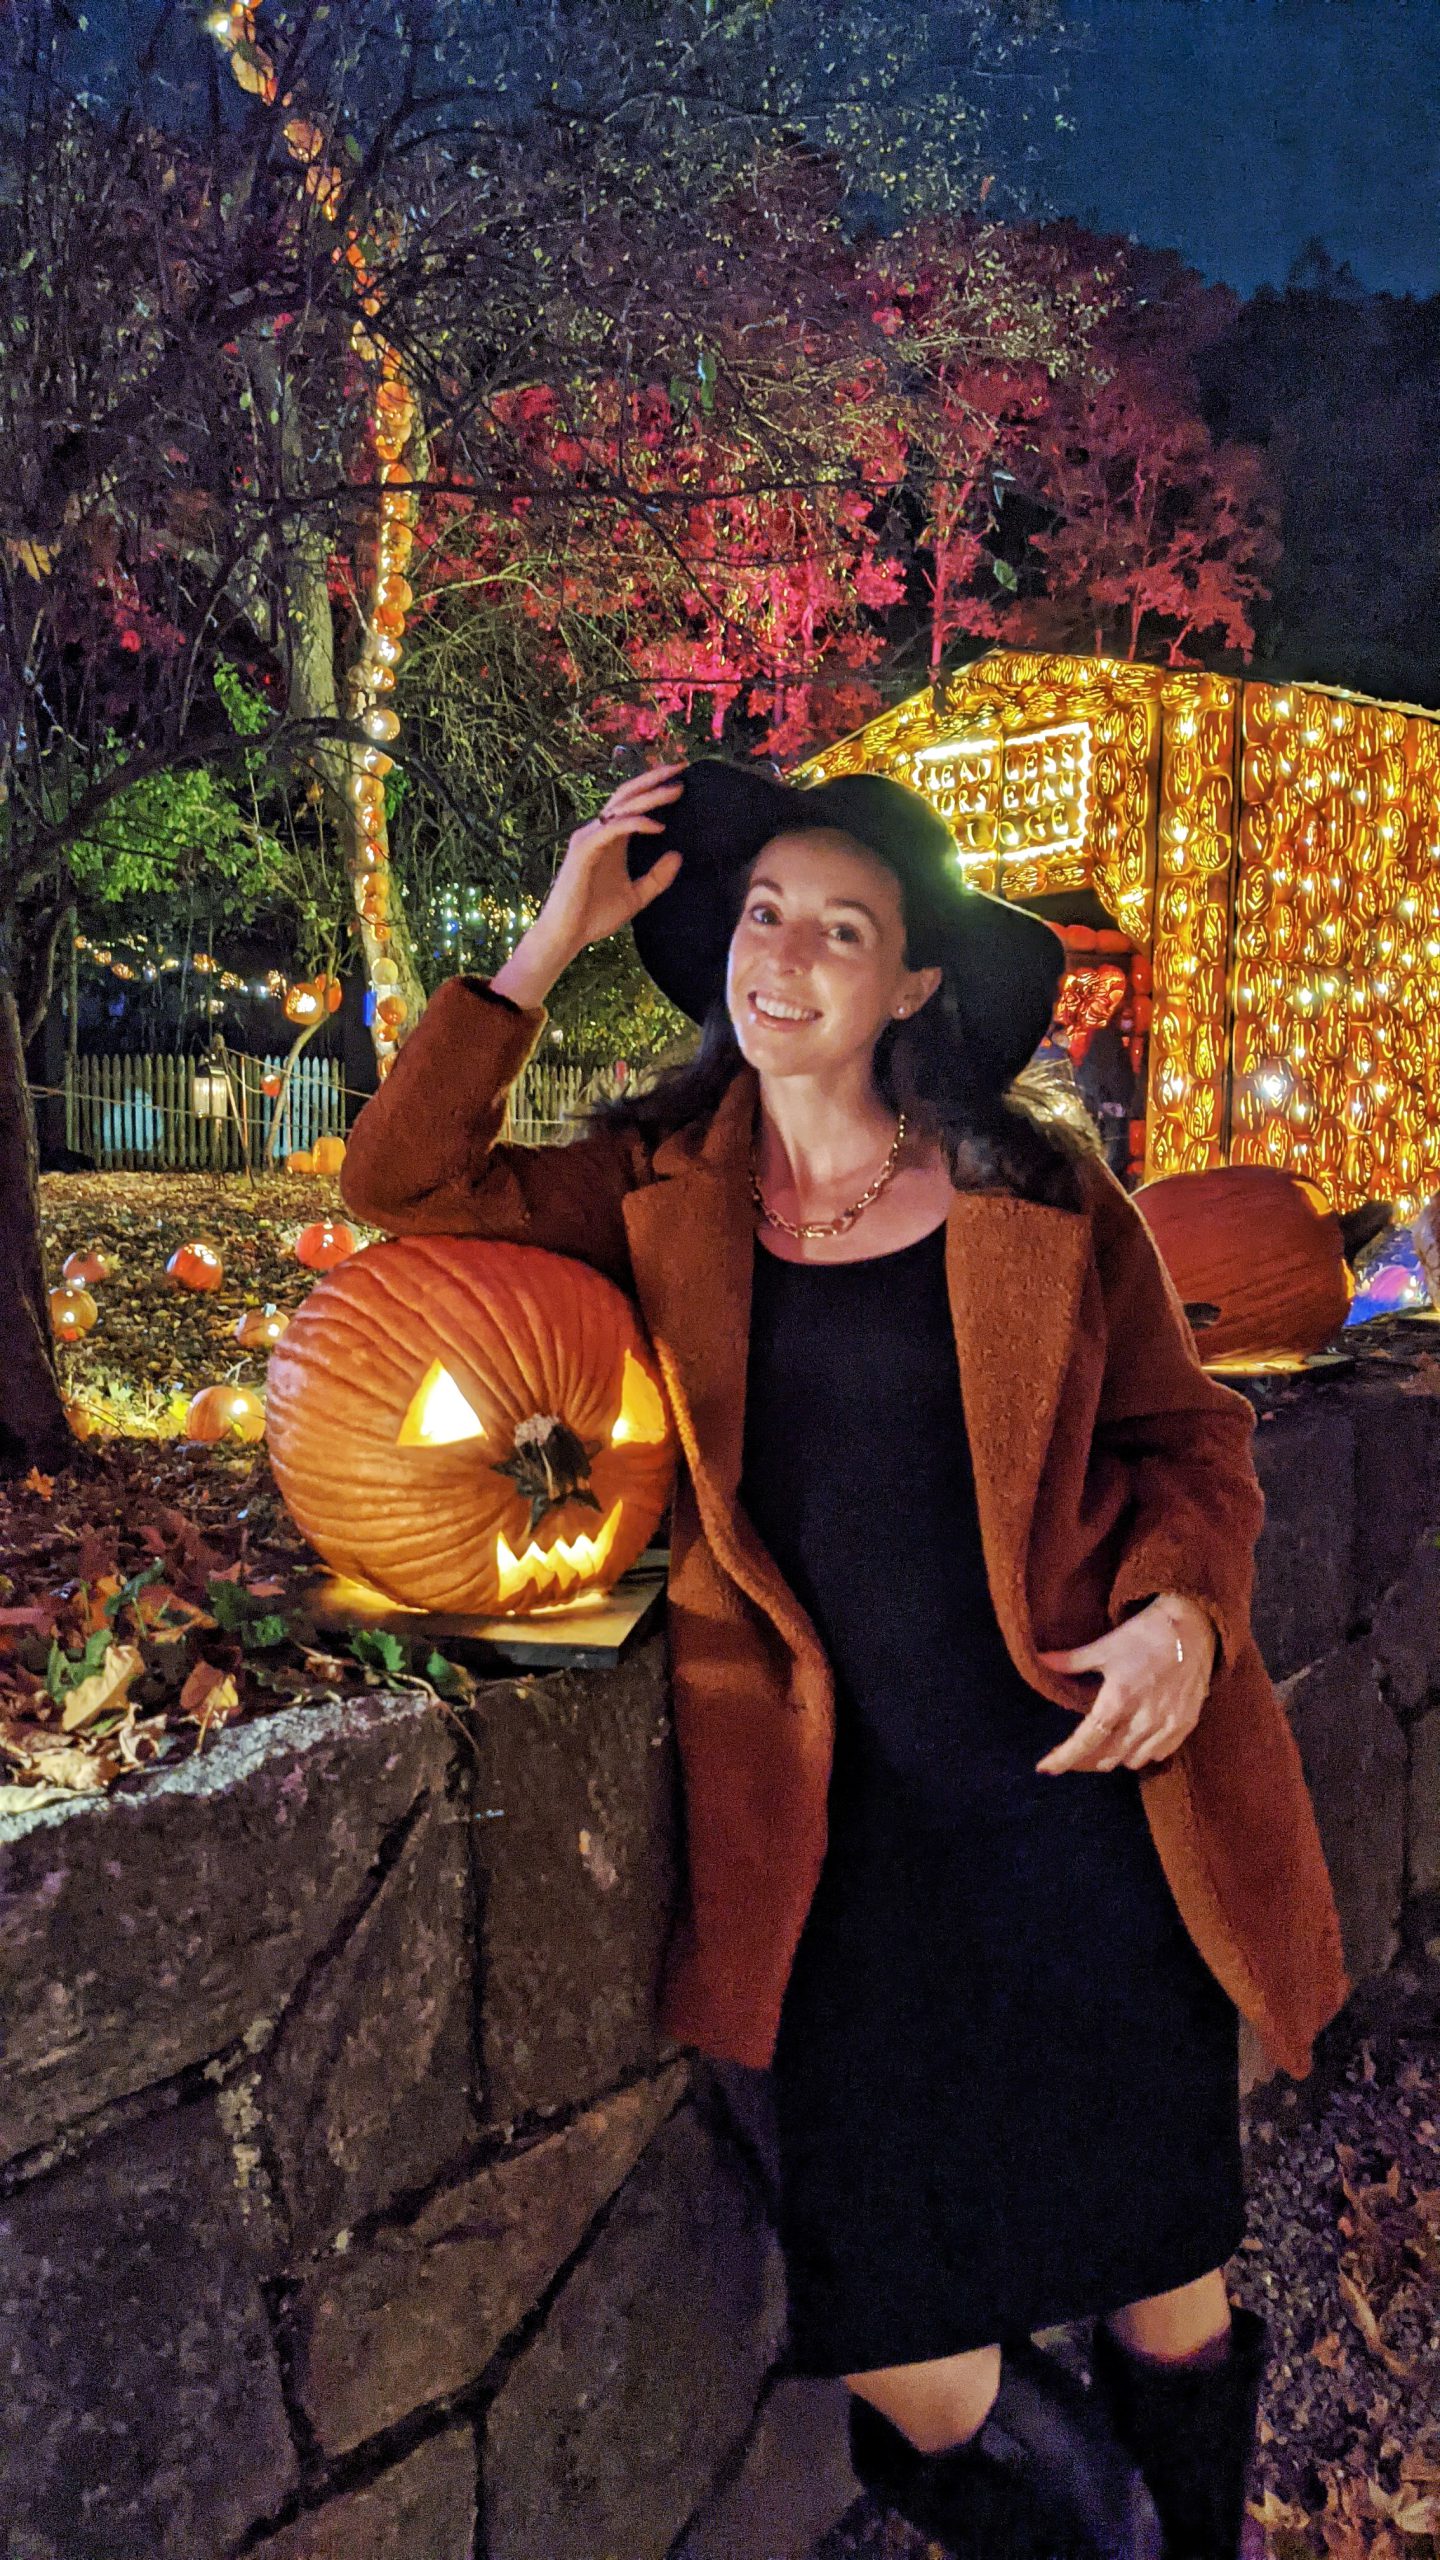 Sarah at the Pumpkin Blaze in the Hudson Valley.